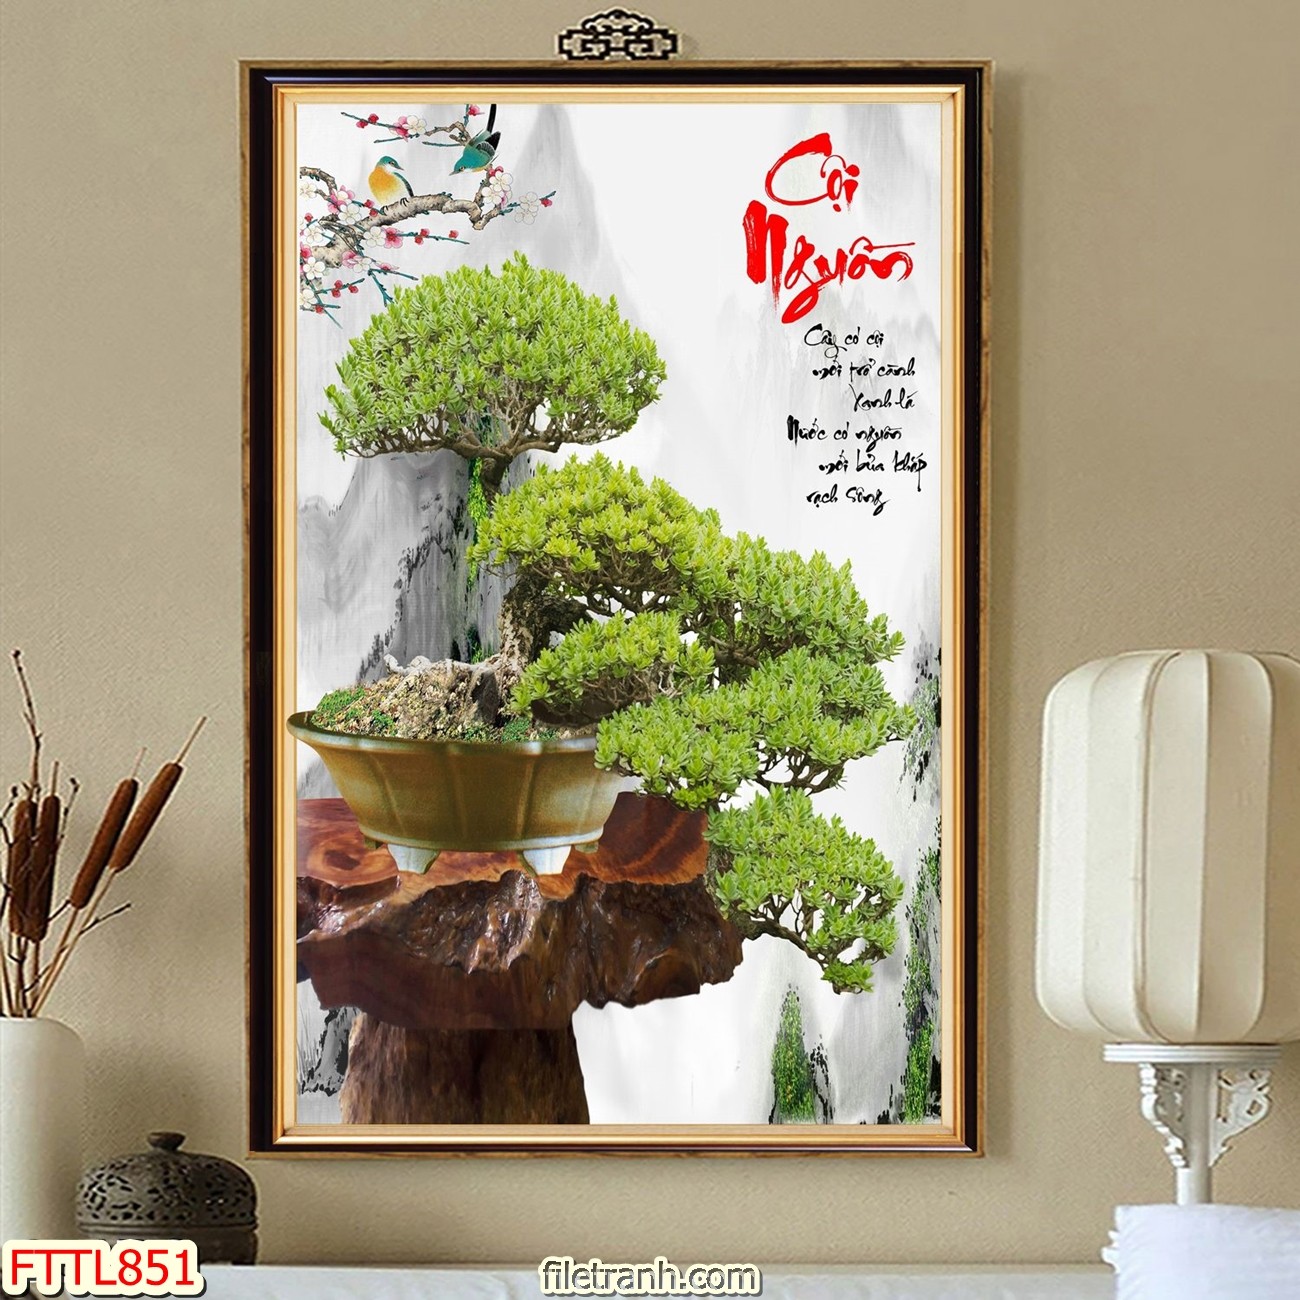 https://filetranh.com/file-tranh-chau-mai-bonsai/file-tranh-chau-mai-bonsai-fttl851.html